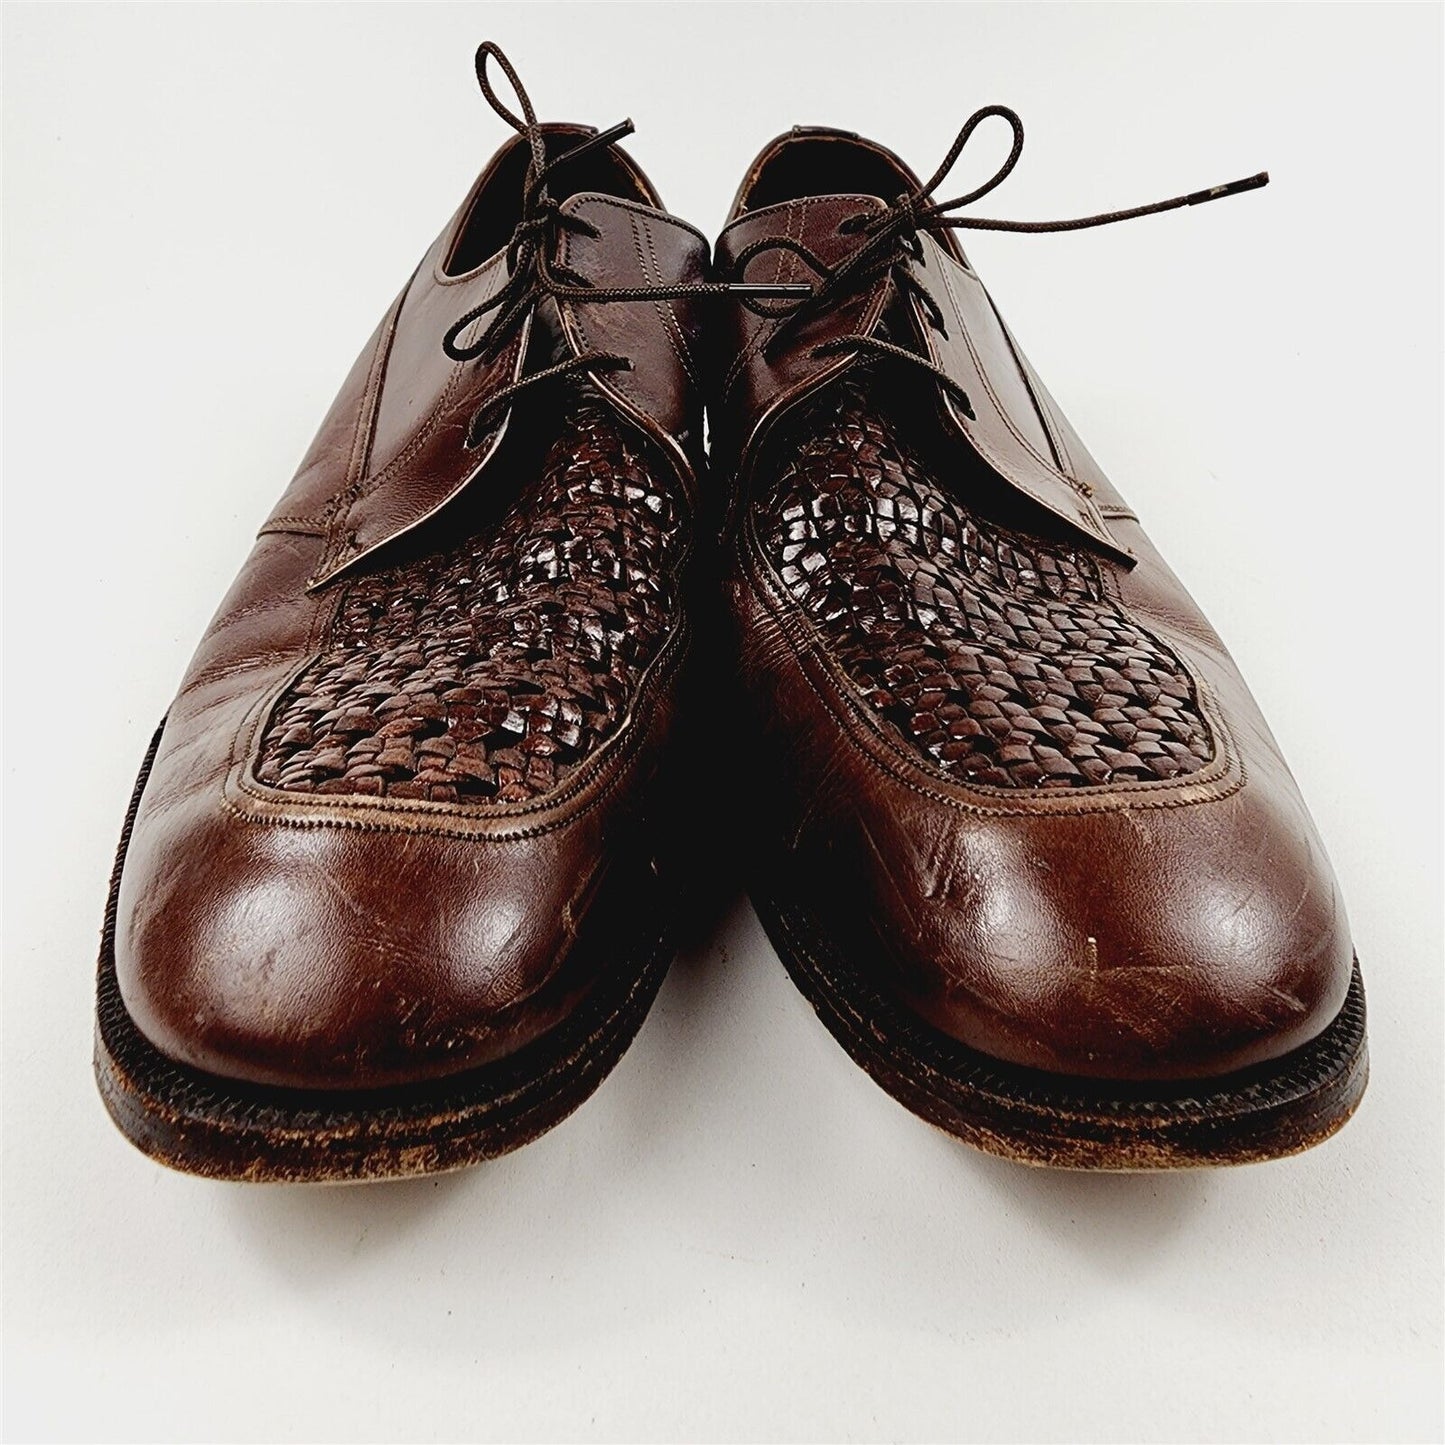 Vintage Florsheim Brown Leather Ventilated Woven Oxfords Dress Shoes Size 9 D